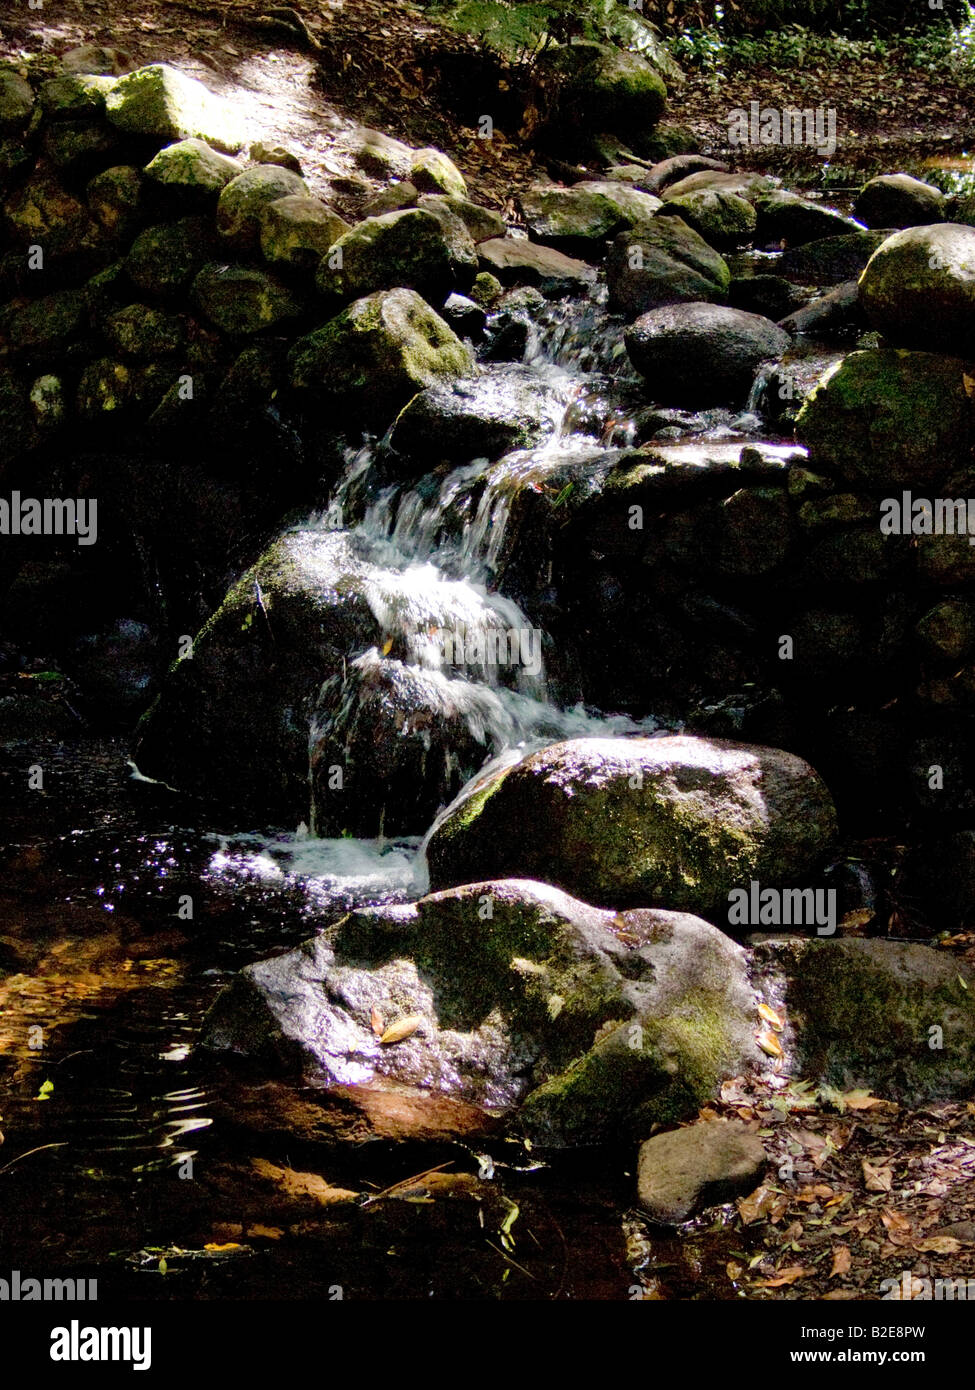 Stream flowing through rocks in forest, Garajonay National Park, La Gomera, Canary Islands, Spain Stock Photo